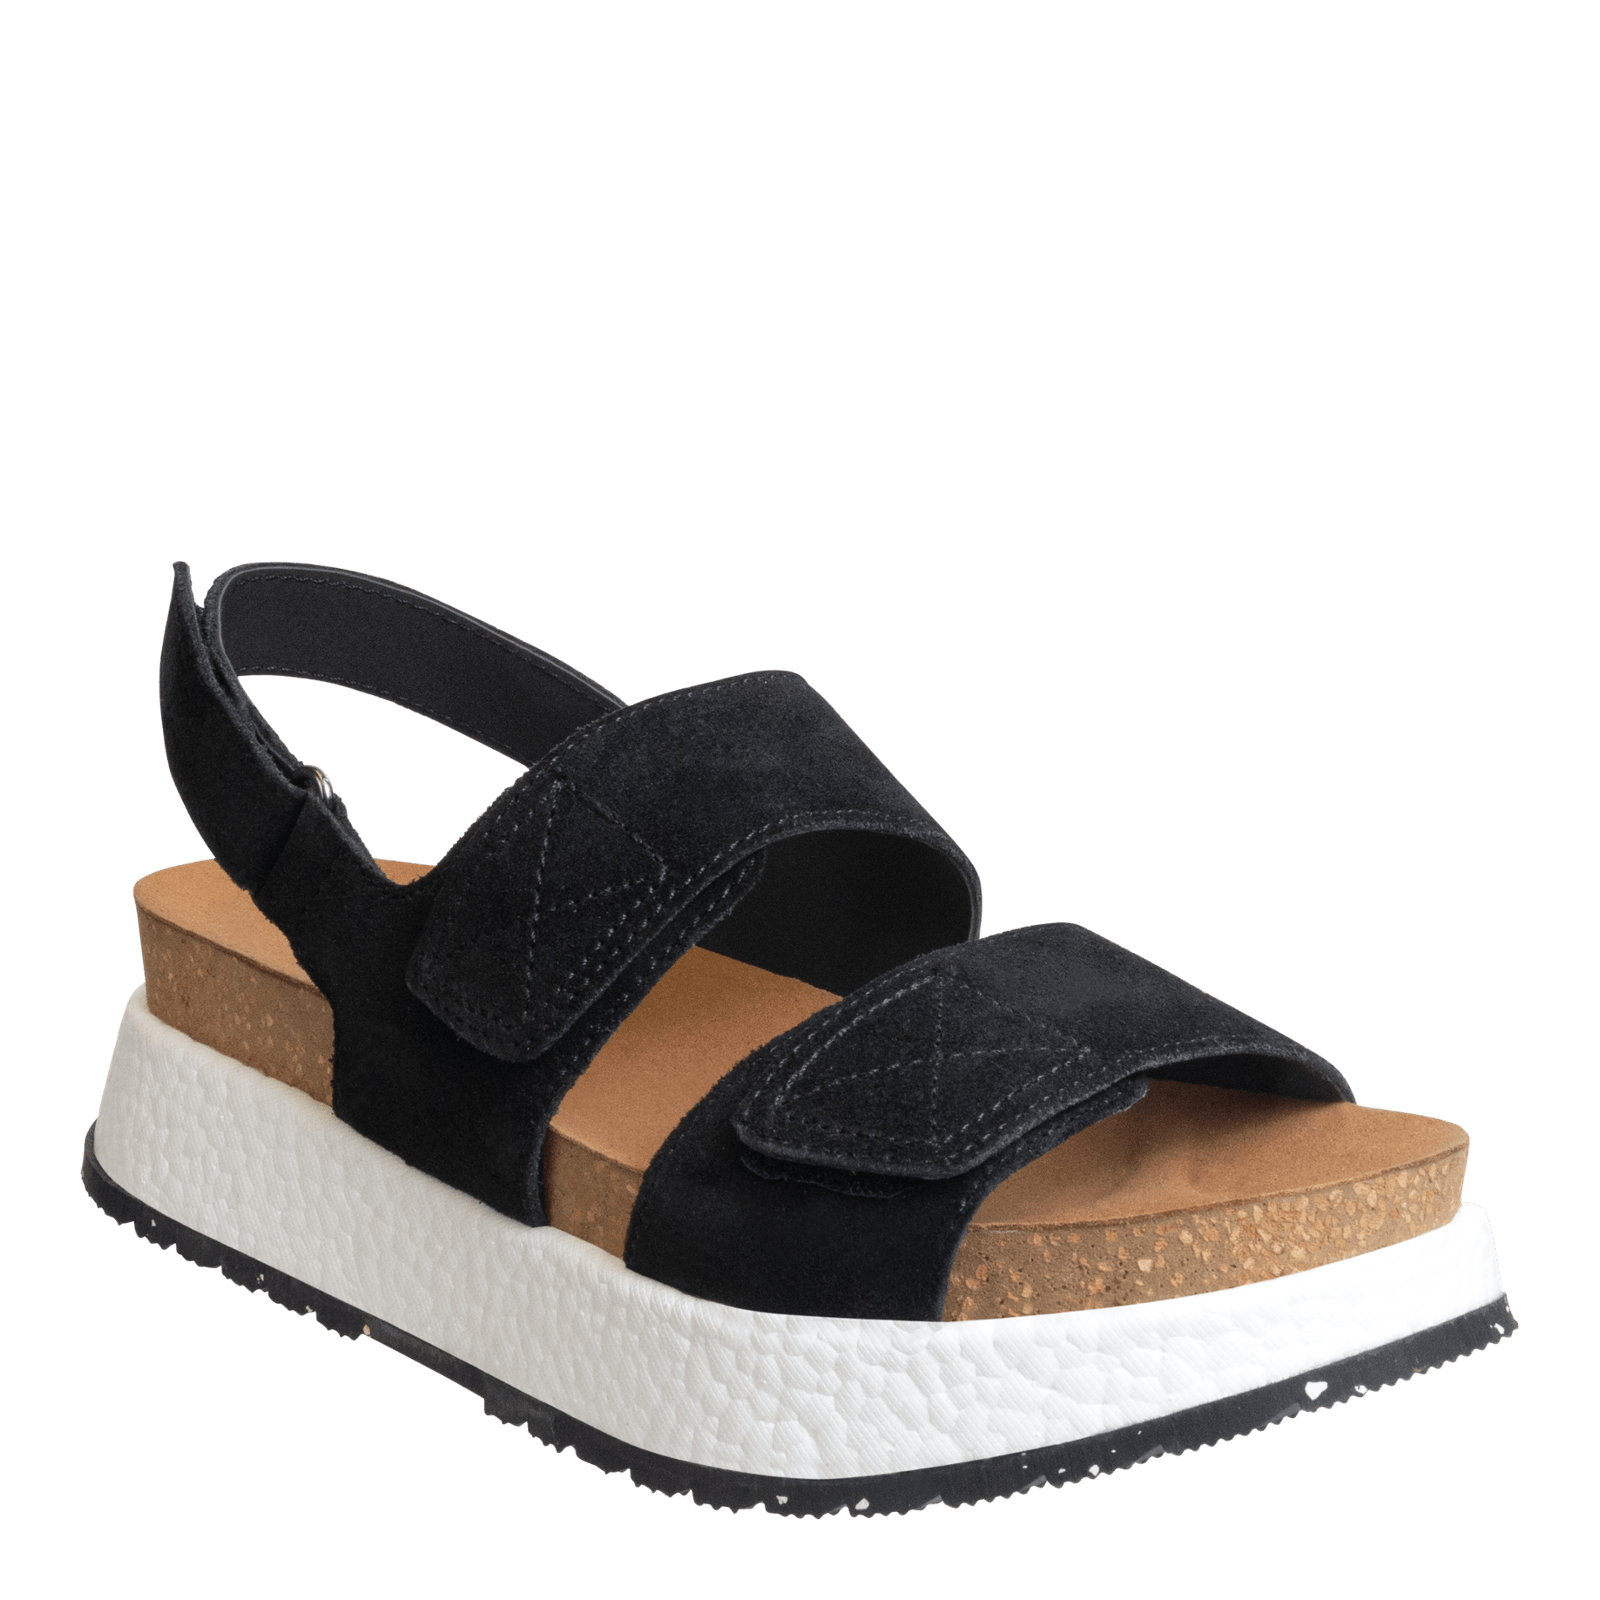 WANDERING in BLACK Platform Sandals